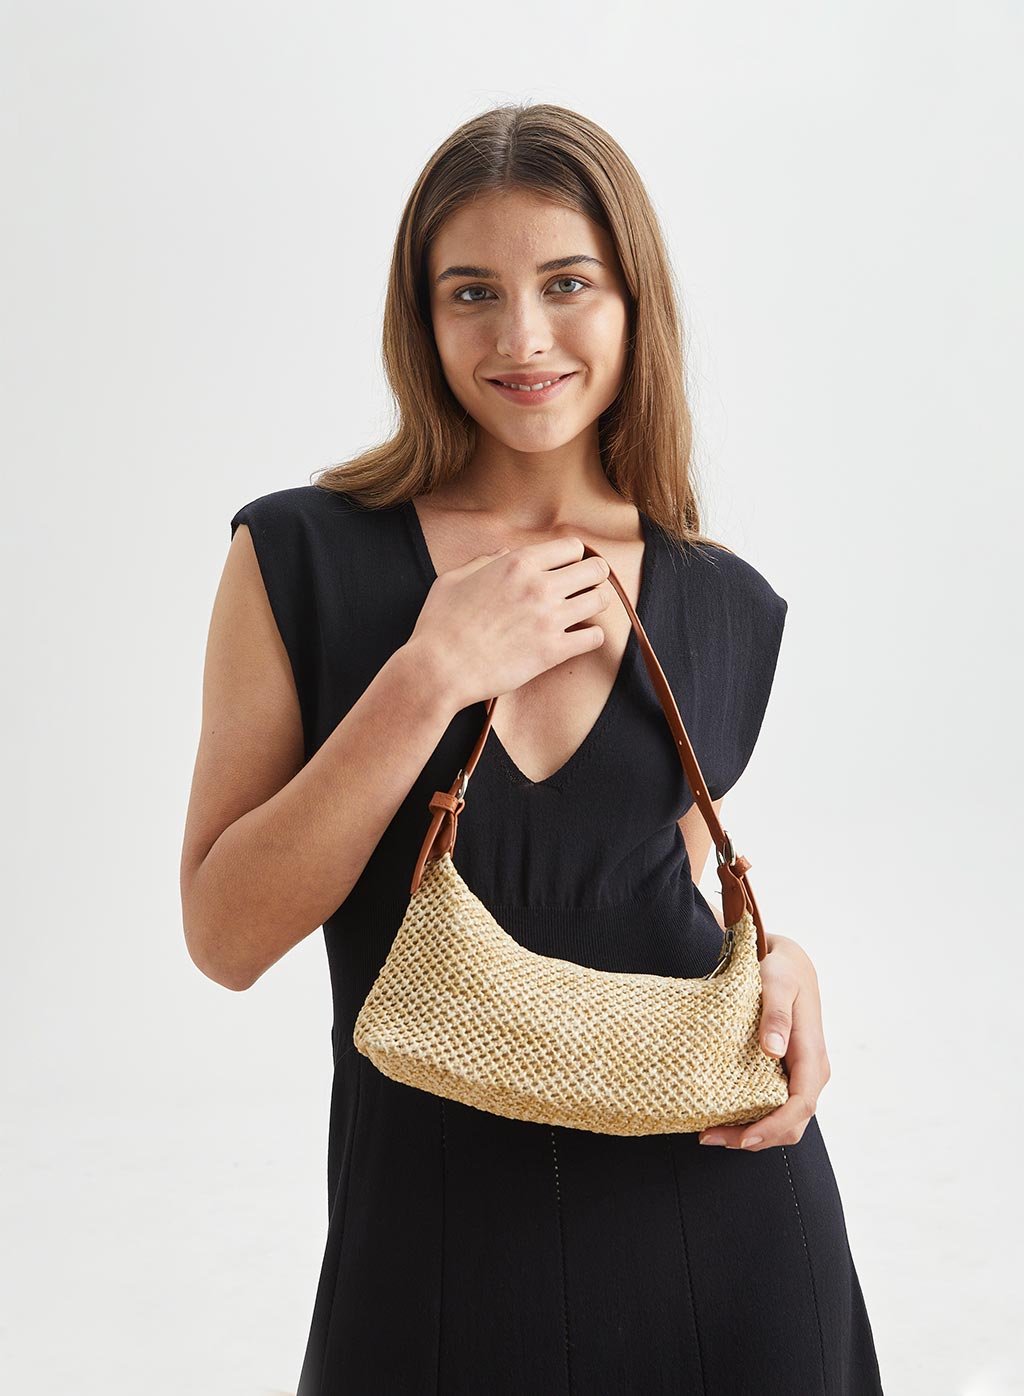 PAUSE 'Blush' Mini Tote Bag – PAUSE Online